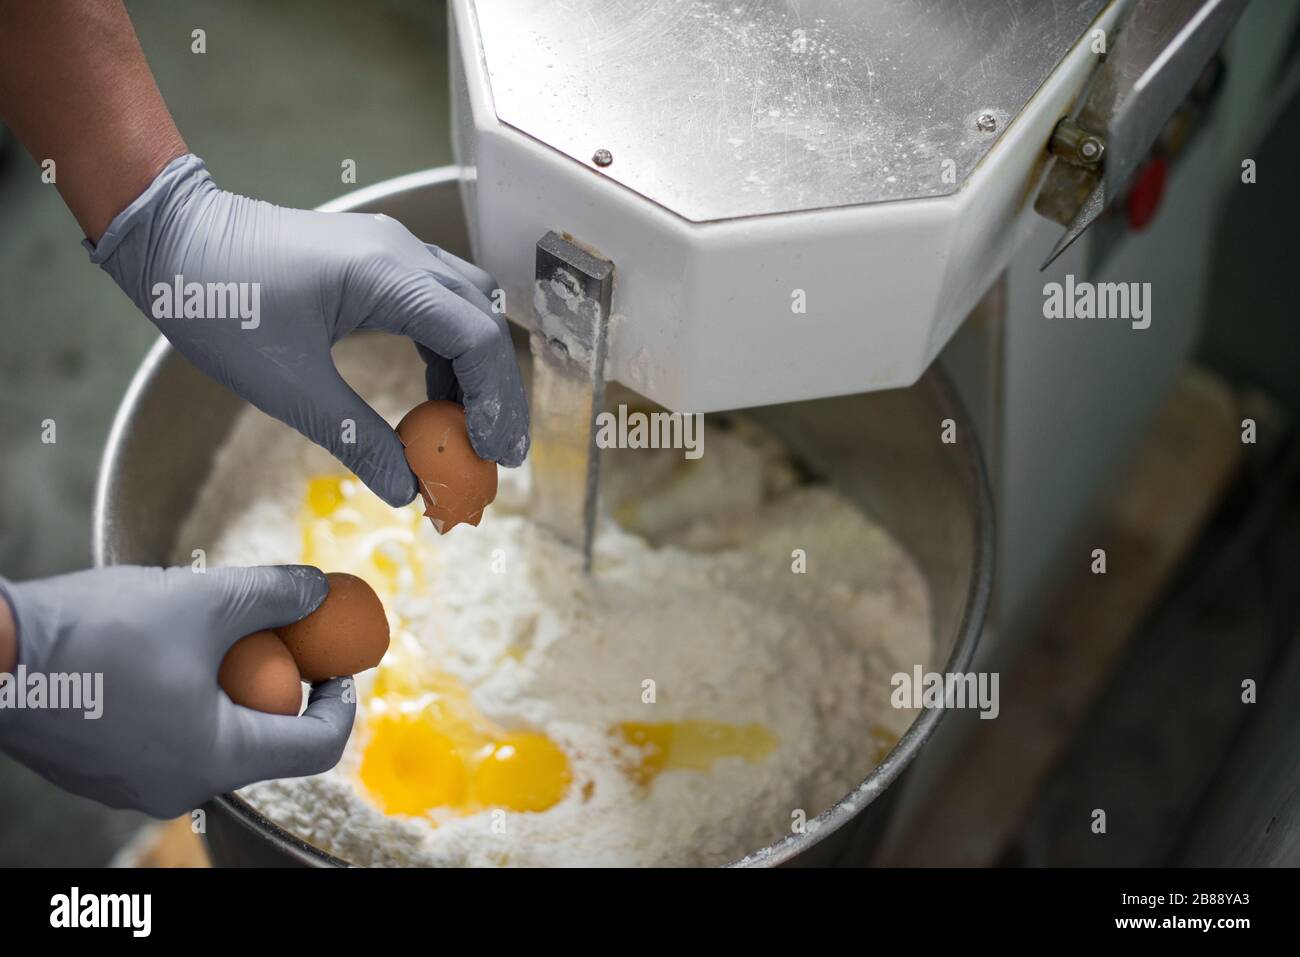 https://c8.alamy.com/comp/2B88YA3/woman-mixing-dough-with-professional-kneader-machine-at-the-manufacturing-2B88YA3.jpg